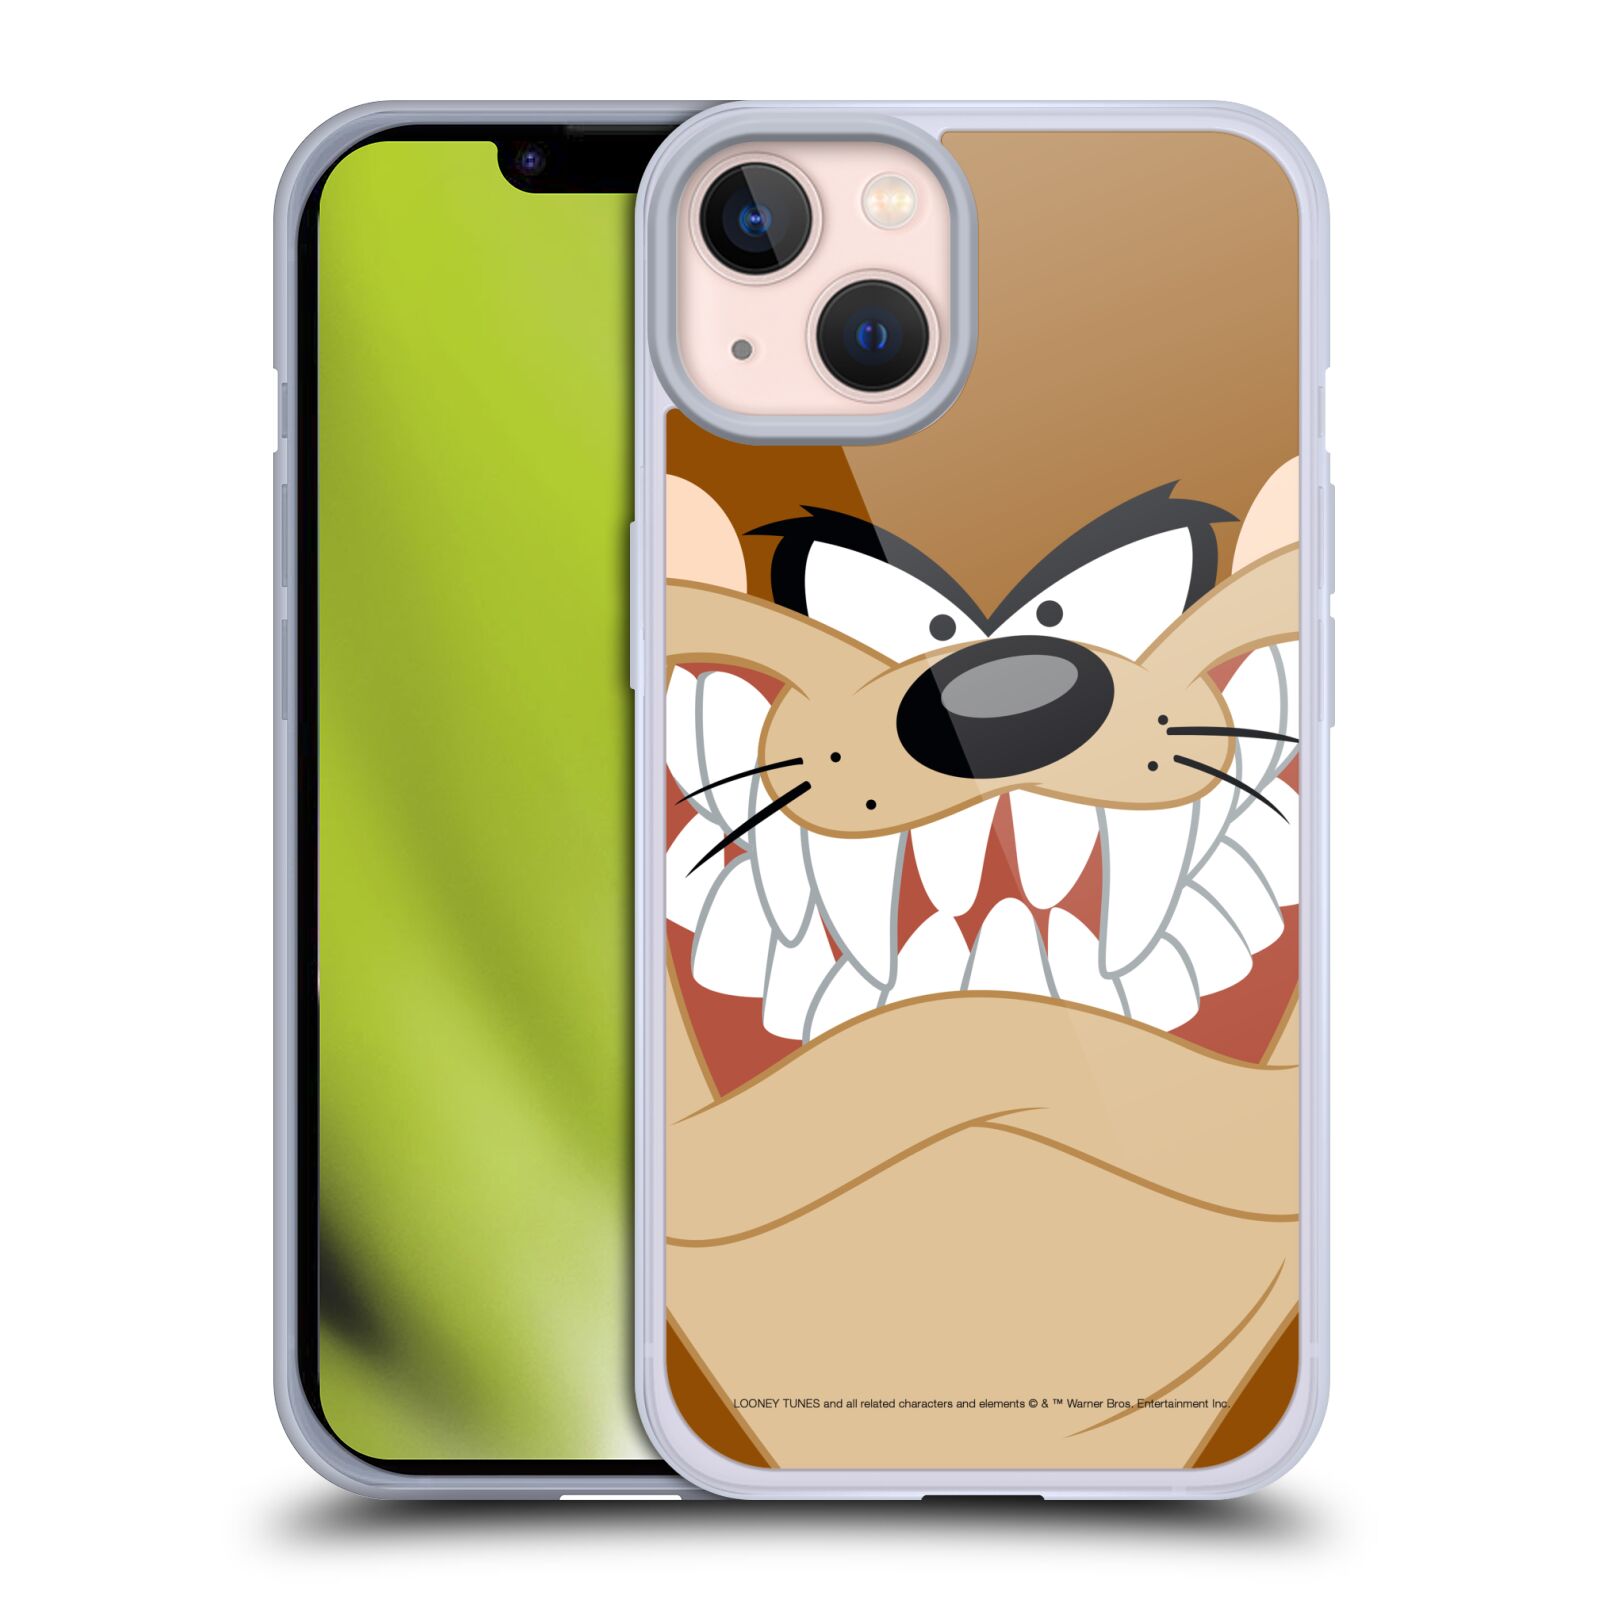 Silikonové pouzdro na mobil Apple iPhone 13 - Looney Tunes - Tasmanian Devil - Tasmánský Čert (Silikonový kryt, obal, pouzdro na mobilní telefon Apple iPhone 13 s licencovaným motivem Looney Tunes - Tasmanian Devil - Tasmánský Čert)